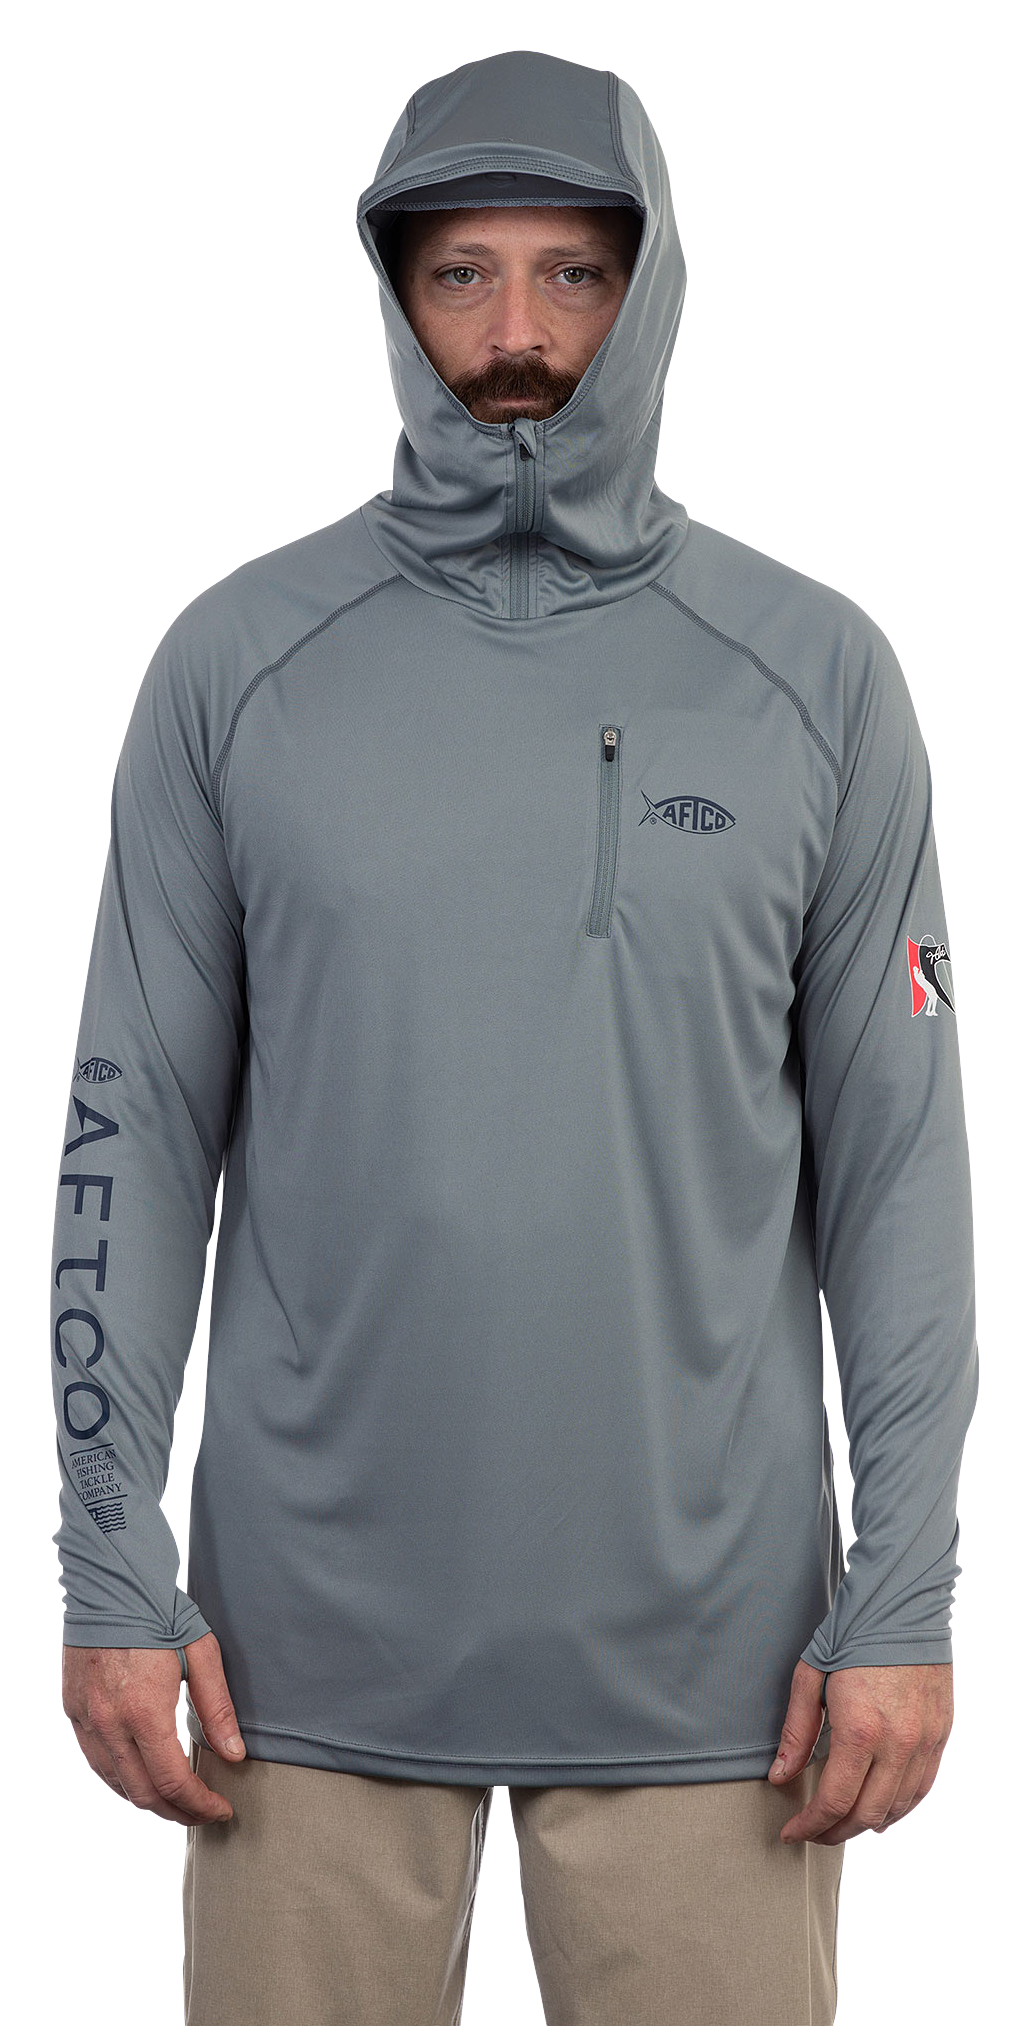 AFTCO Jason Christie Hooded LS Performance Shirt Product Review  #aftcojasonchristieshirt #aftcosunshirt #jasonchristiebass